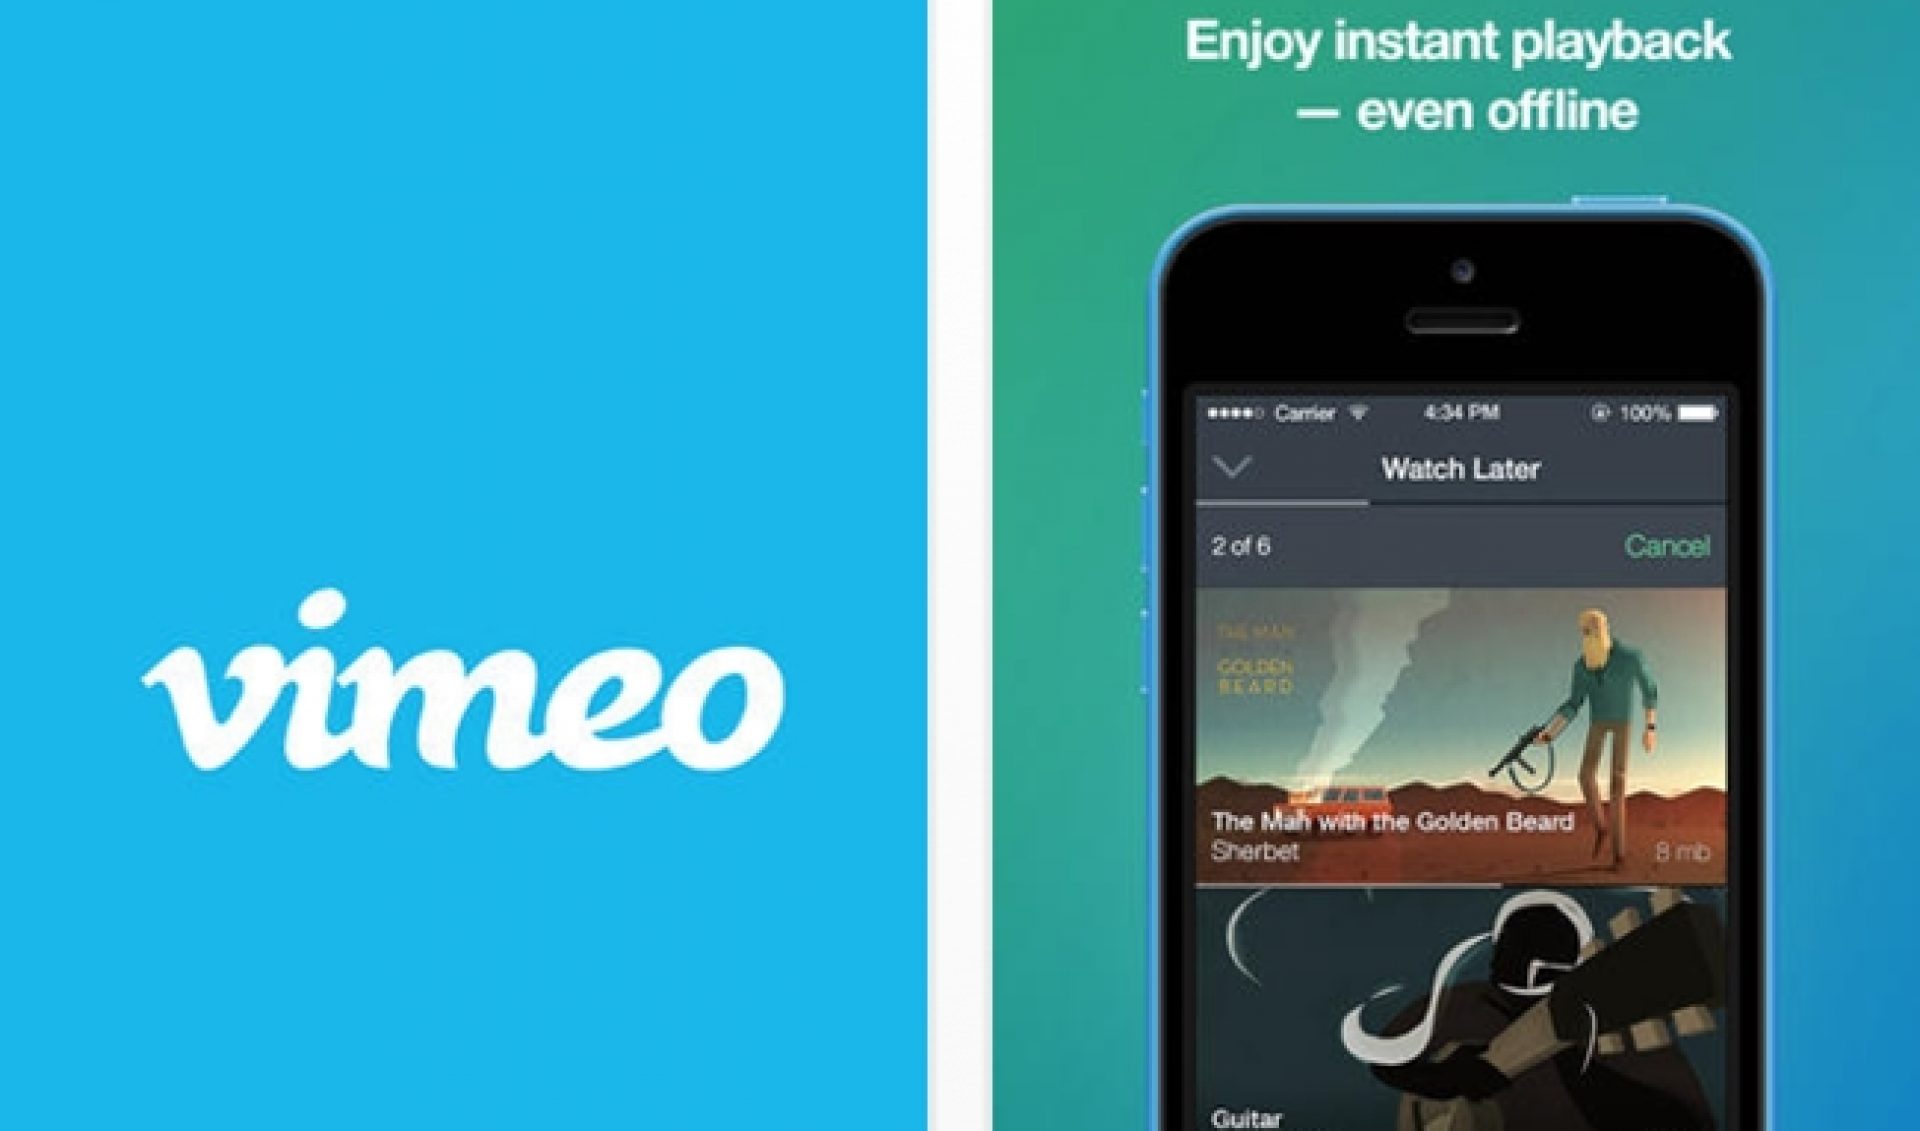 Vimeo’s iOS 7 App Will Have Offline Playback Too